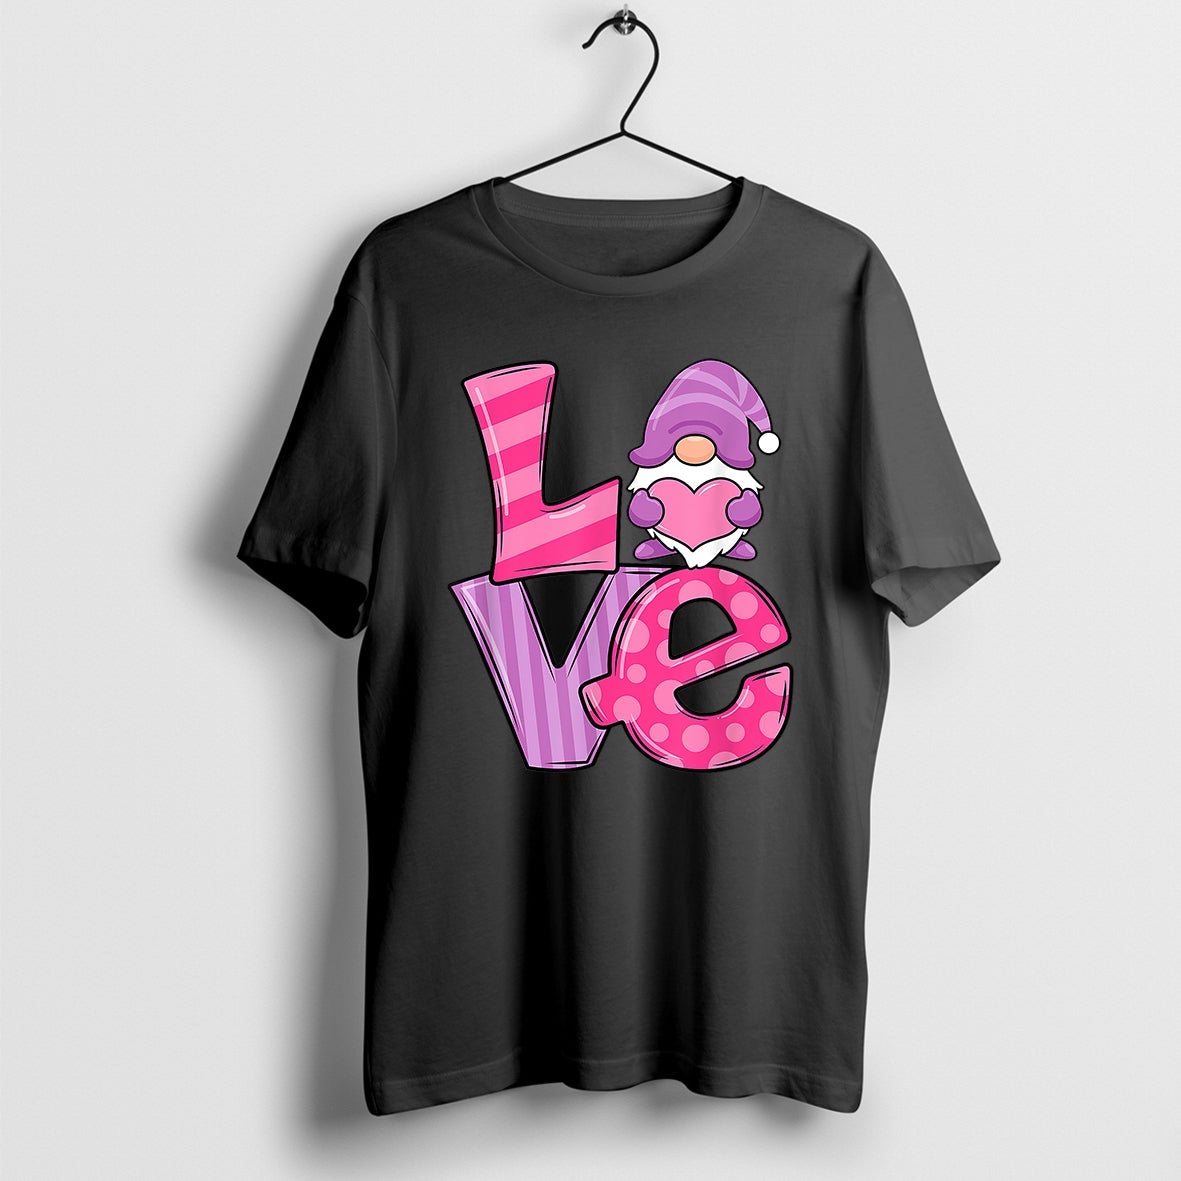 Gnome Valentine's Day Love Heart T-Shirt, Gnome Valentine Shirt, Love Shirt, Heart Shirt, Cute Valentine Shirt